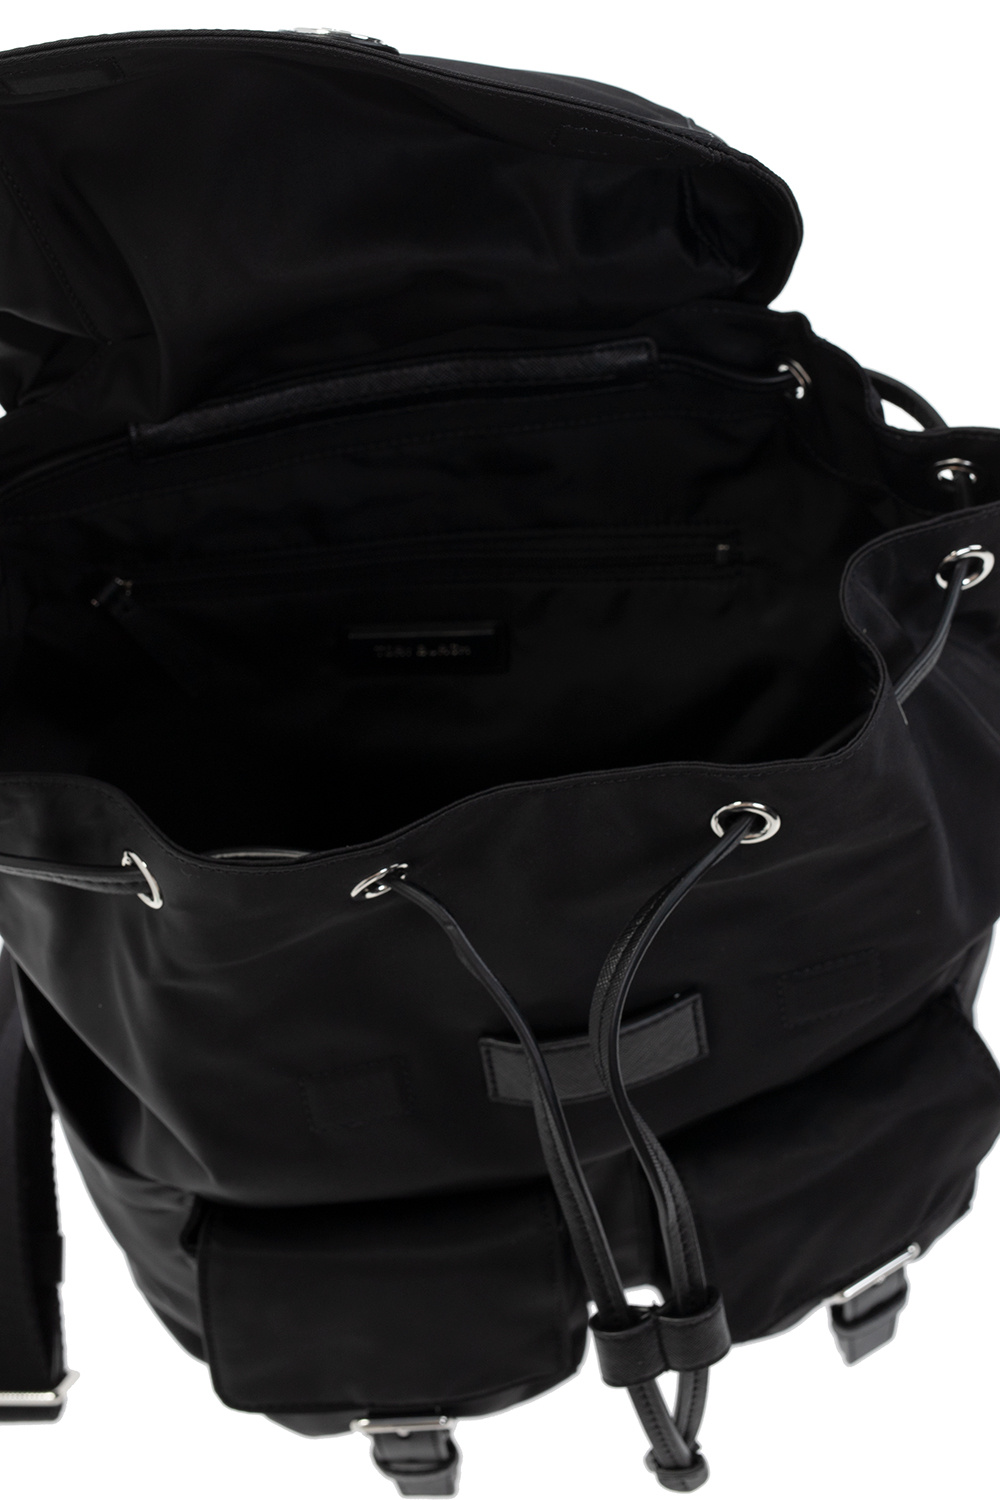 Tory Burch ‘Virginia’ metallic backpack